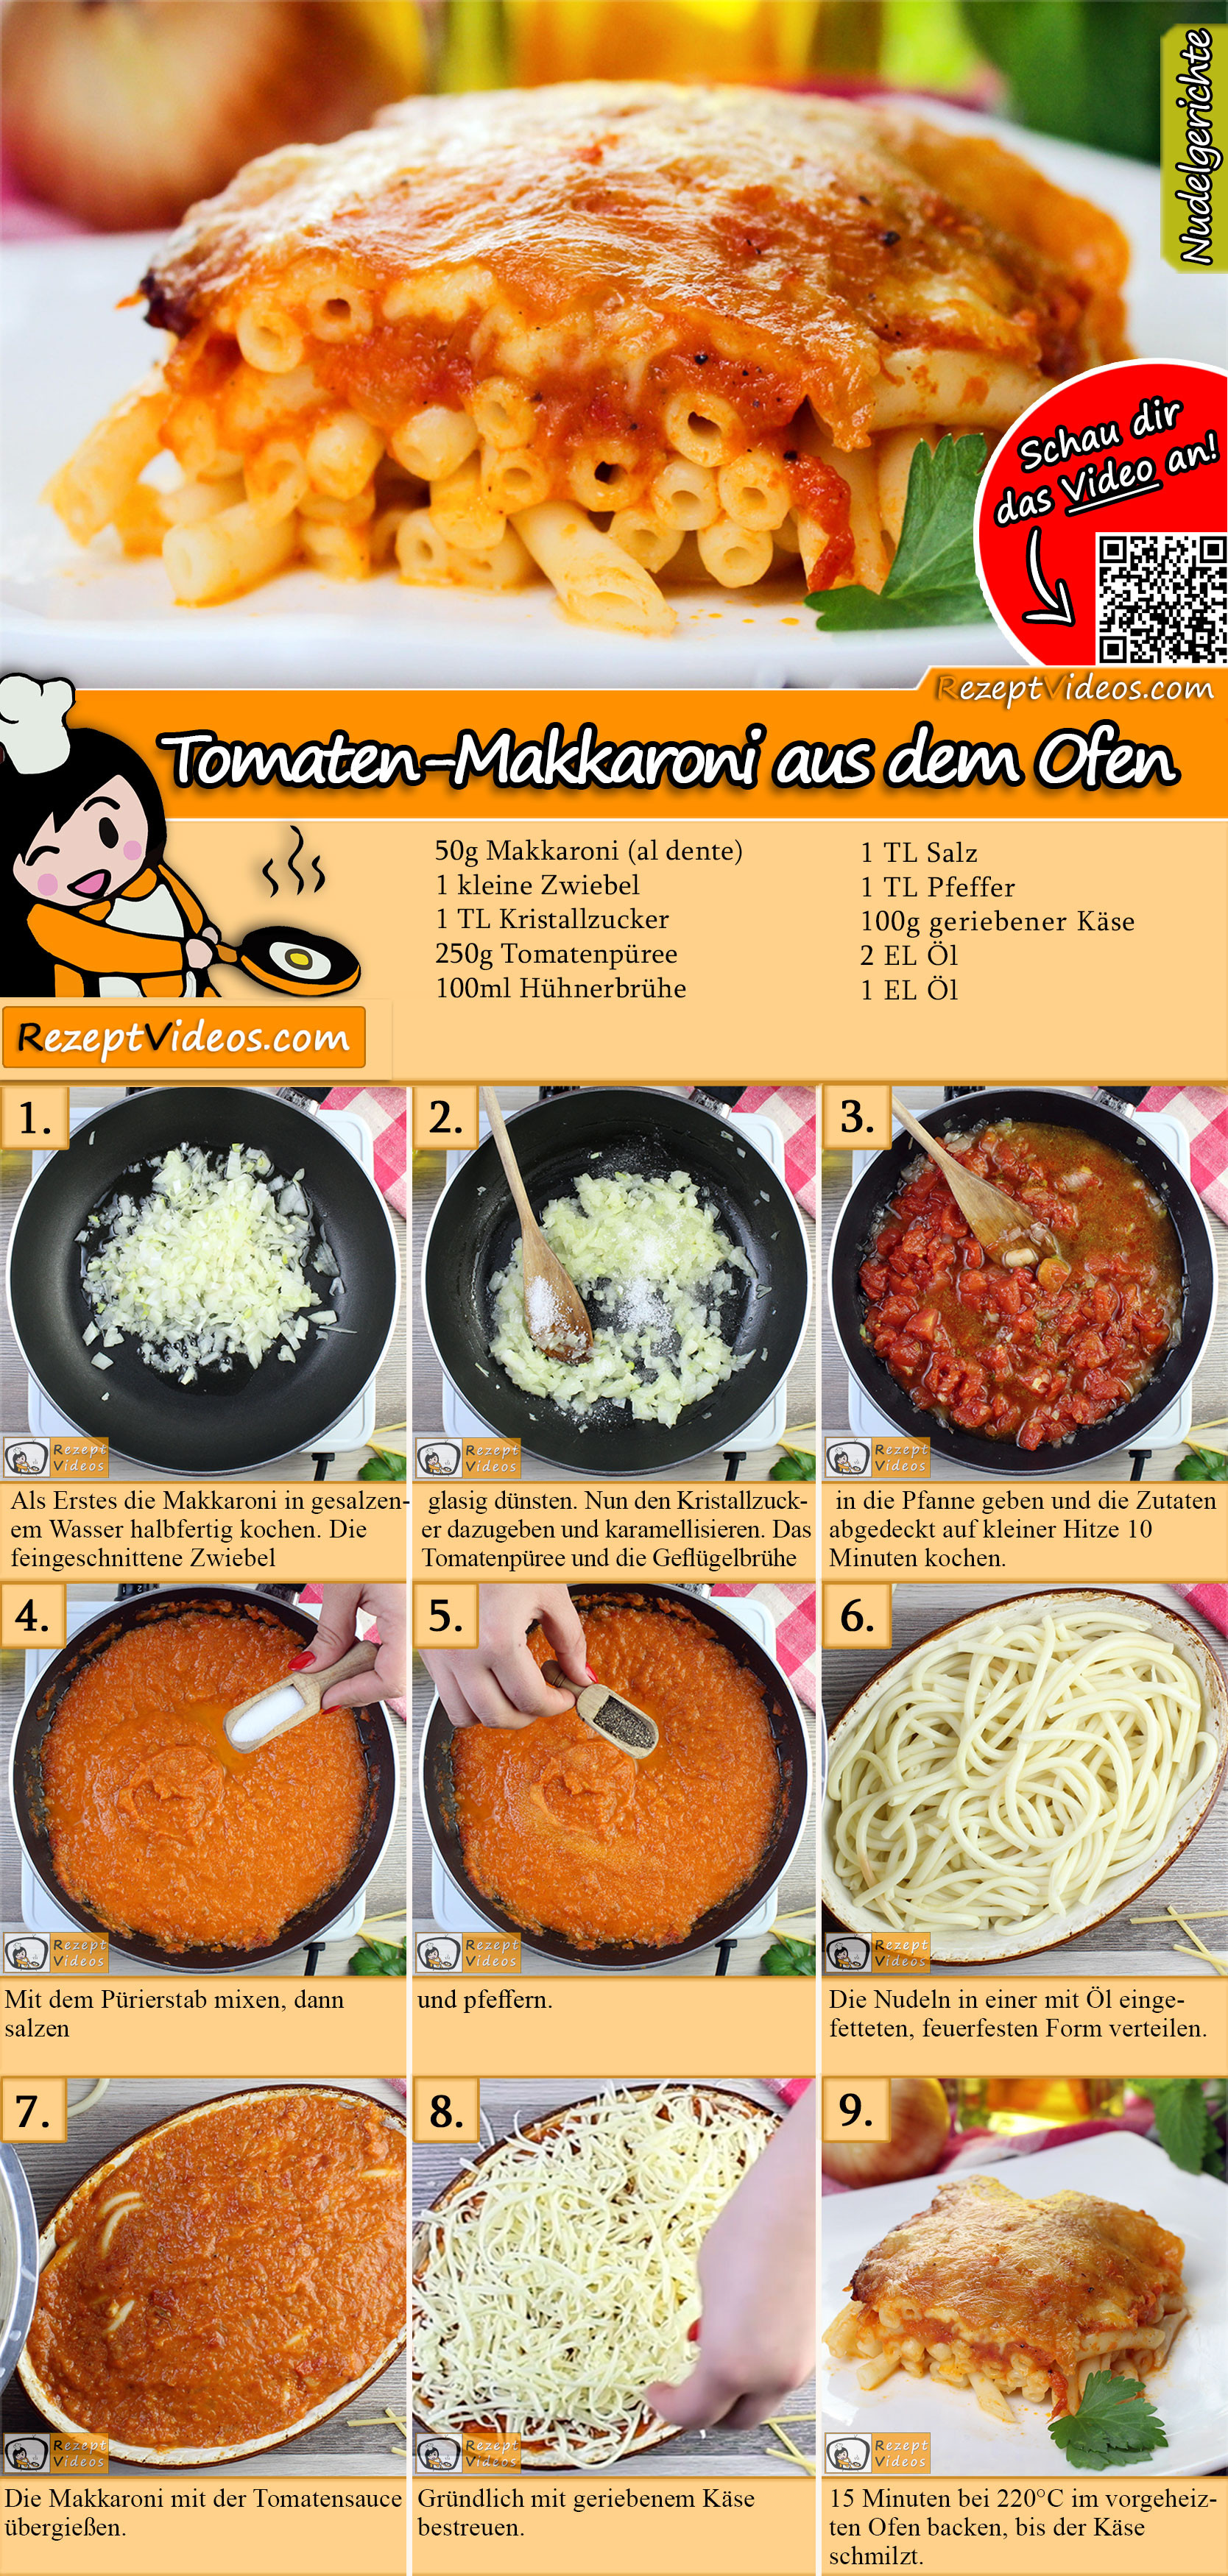 Tomaten-Makkaroni aus dem Ofen Rezept mit Video